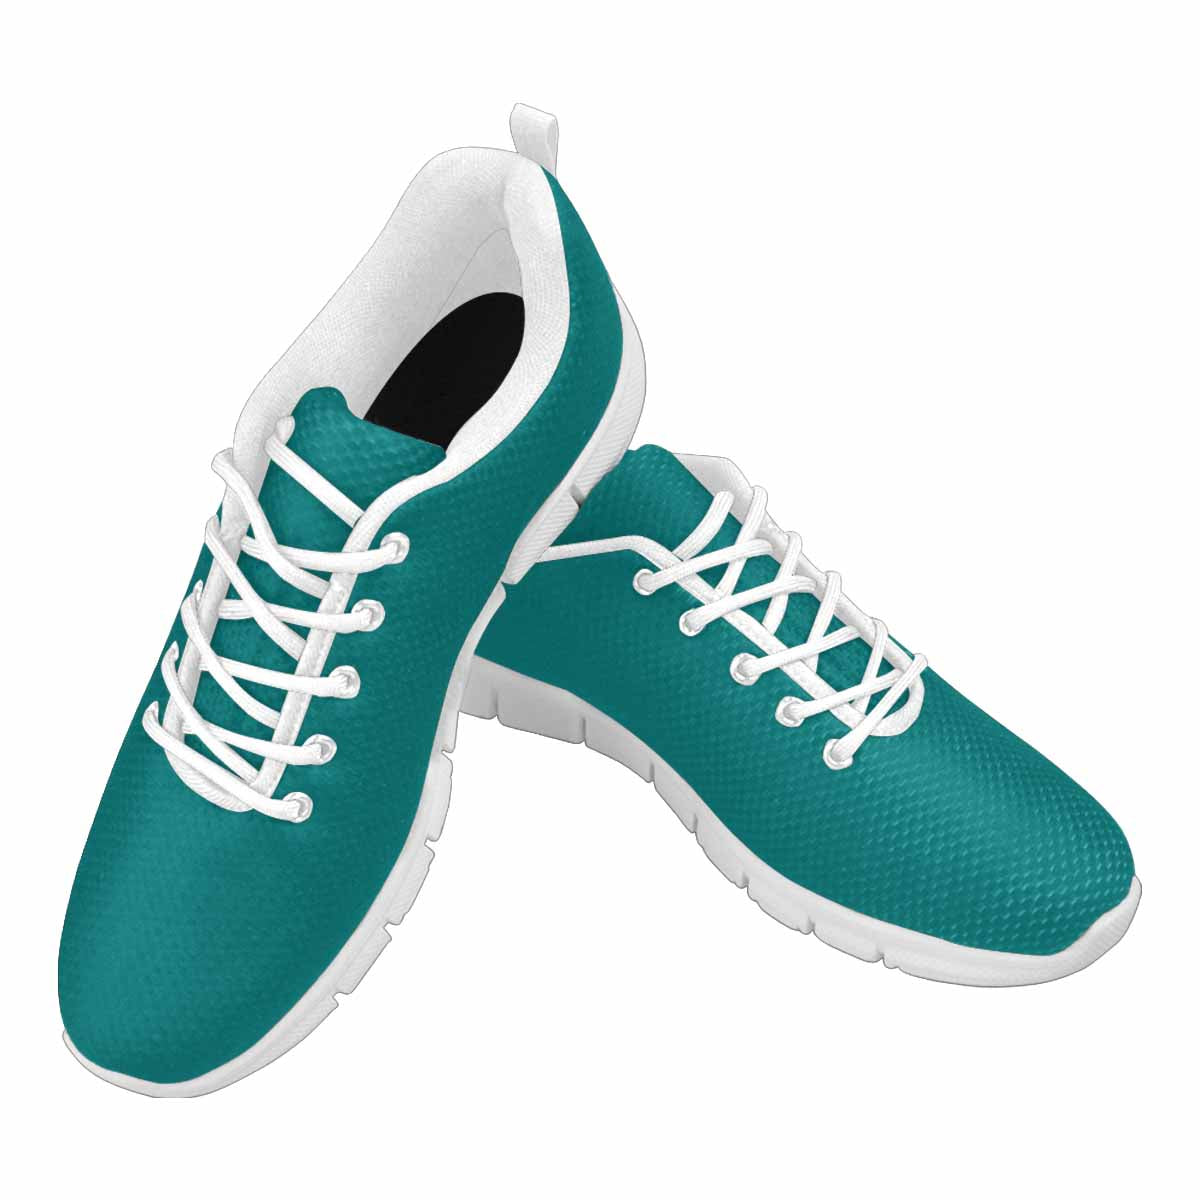 Sneakers For Men,    Dark Teal Green   - Running Shoes